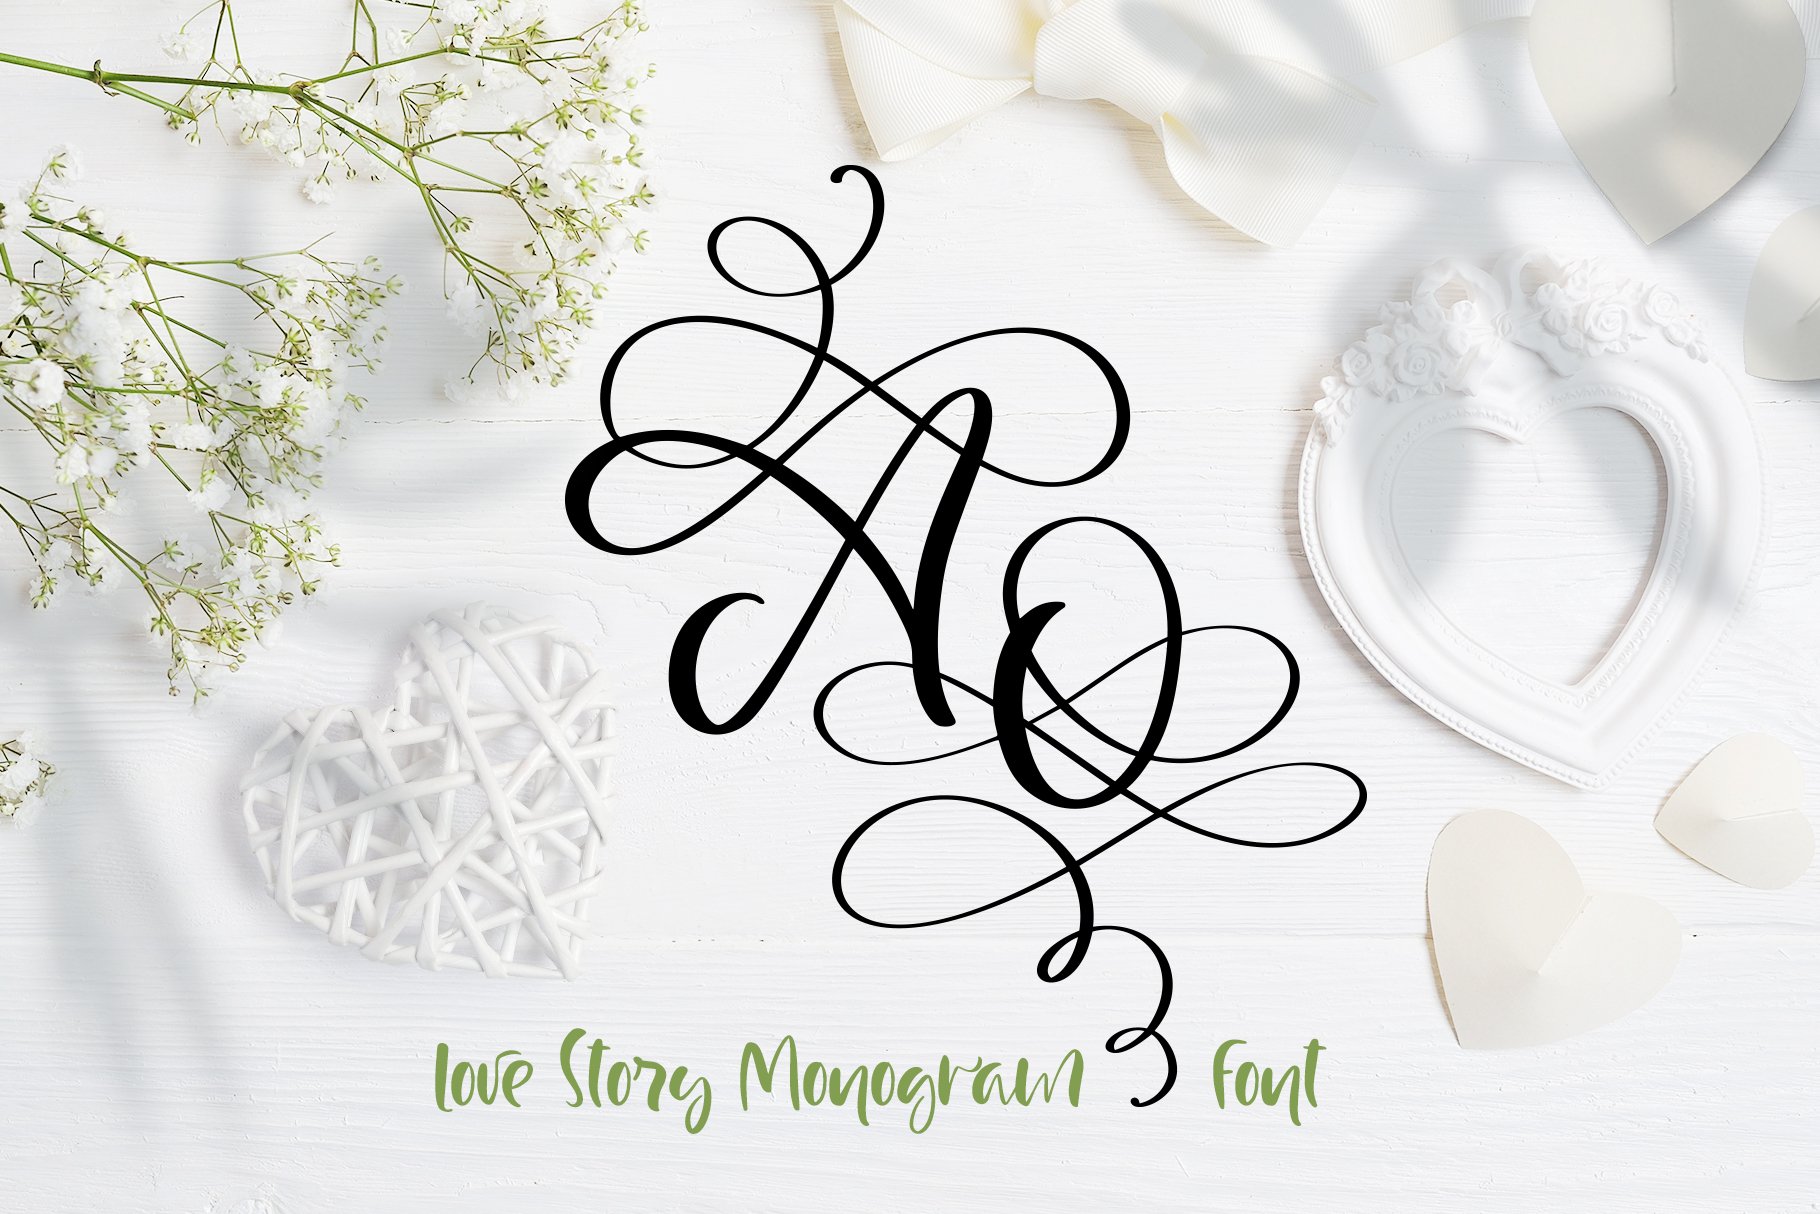 Love Story Monogram Font cover image.